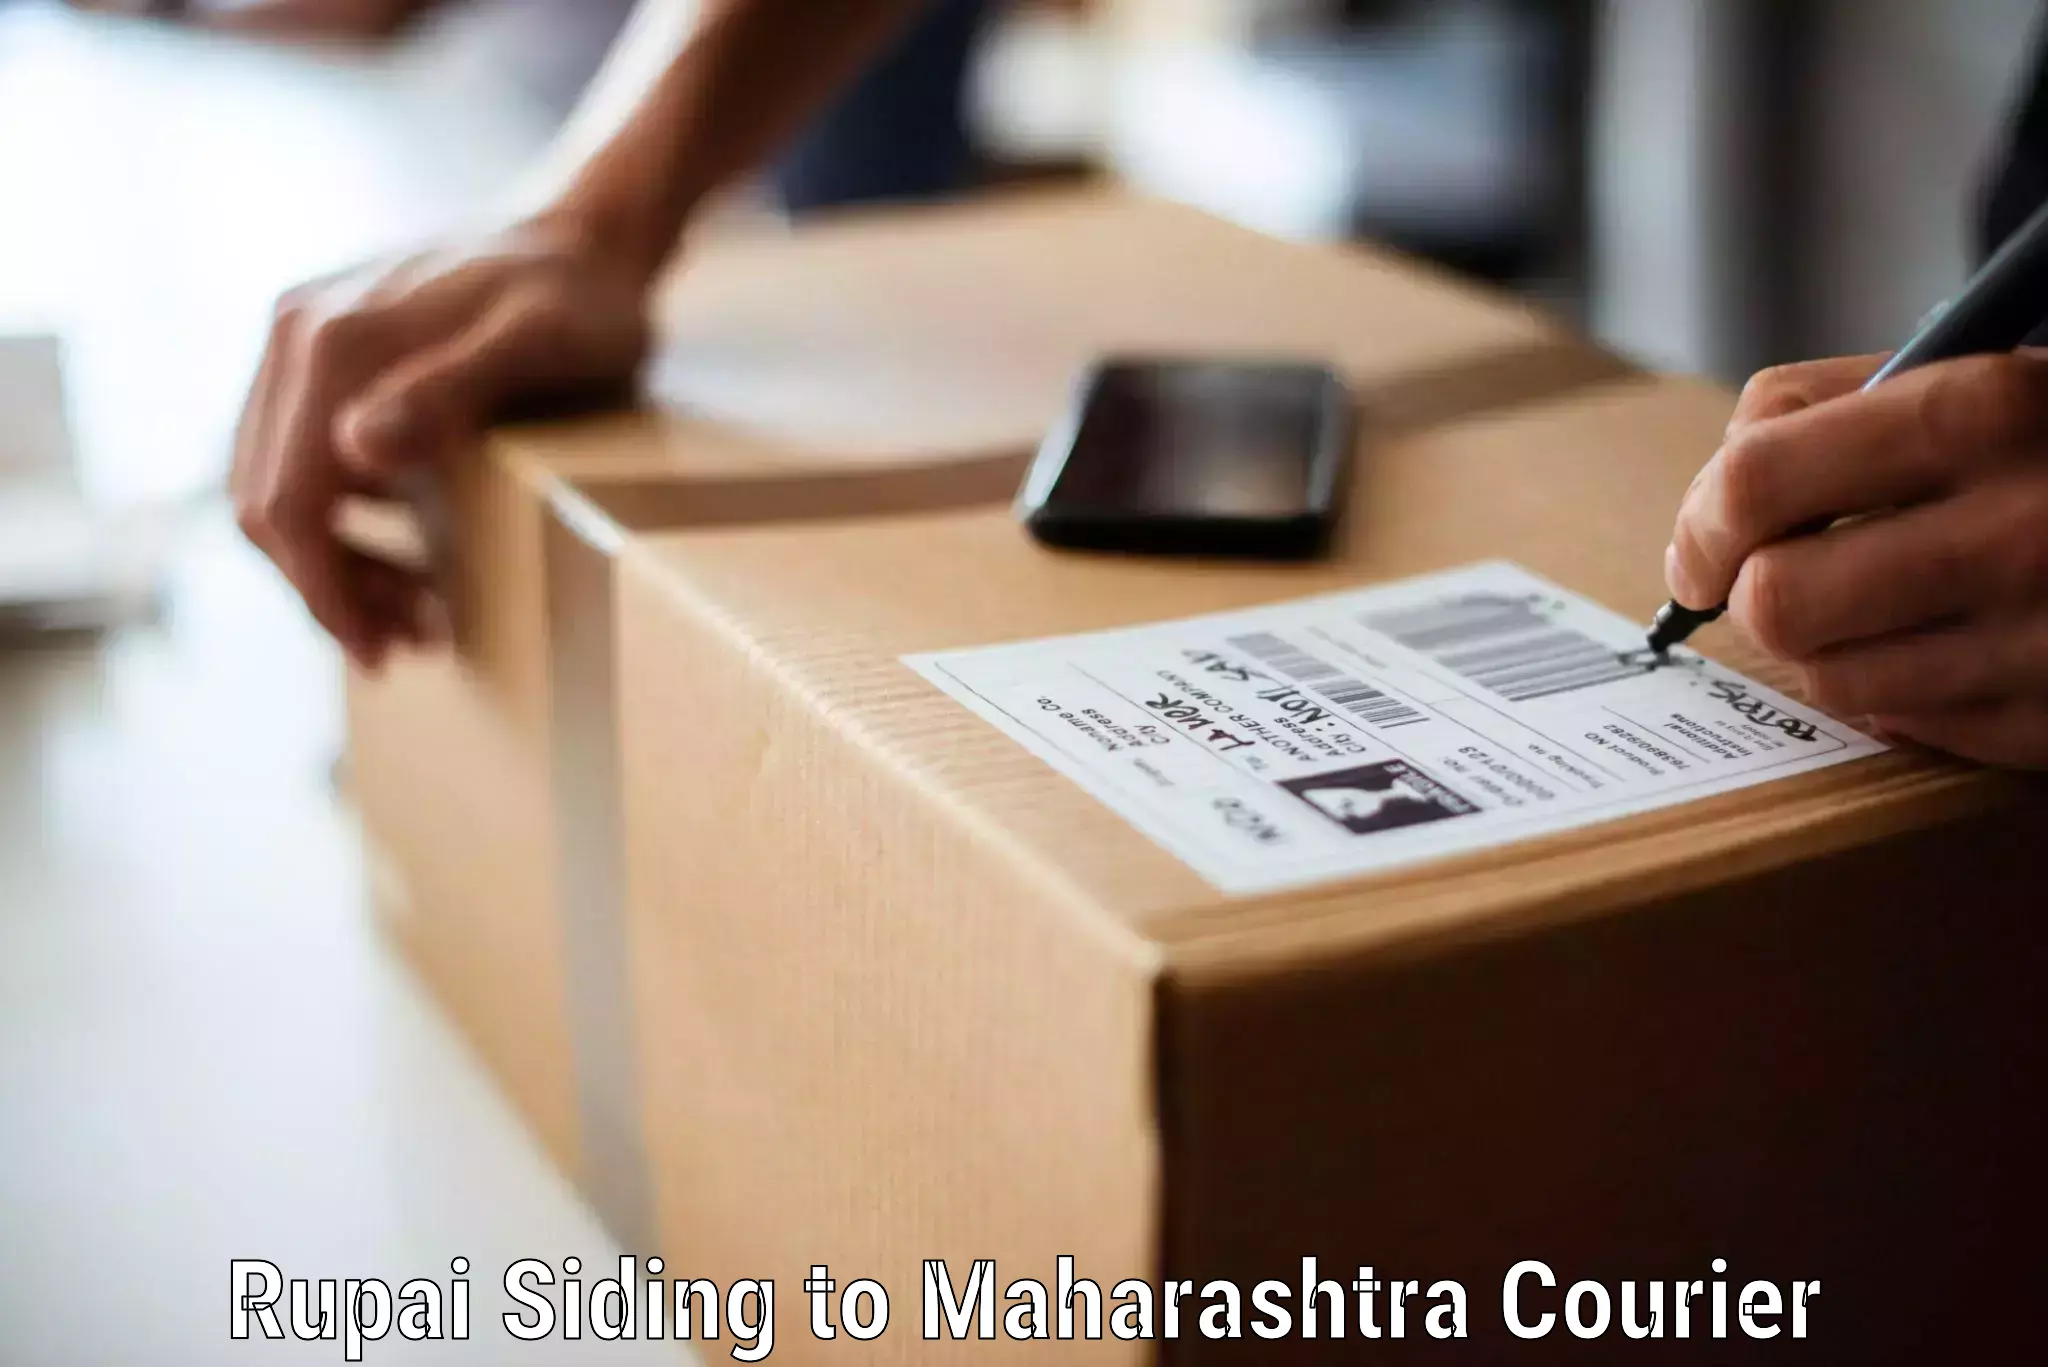 Home goods moving company Rupai Siding to Walchandnagar